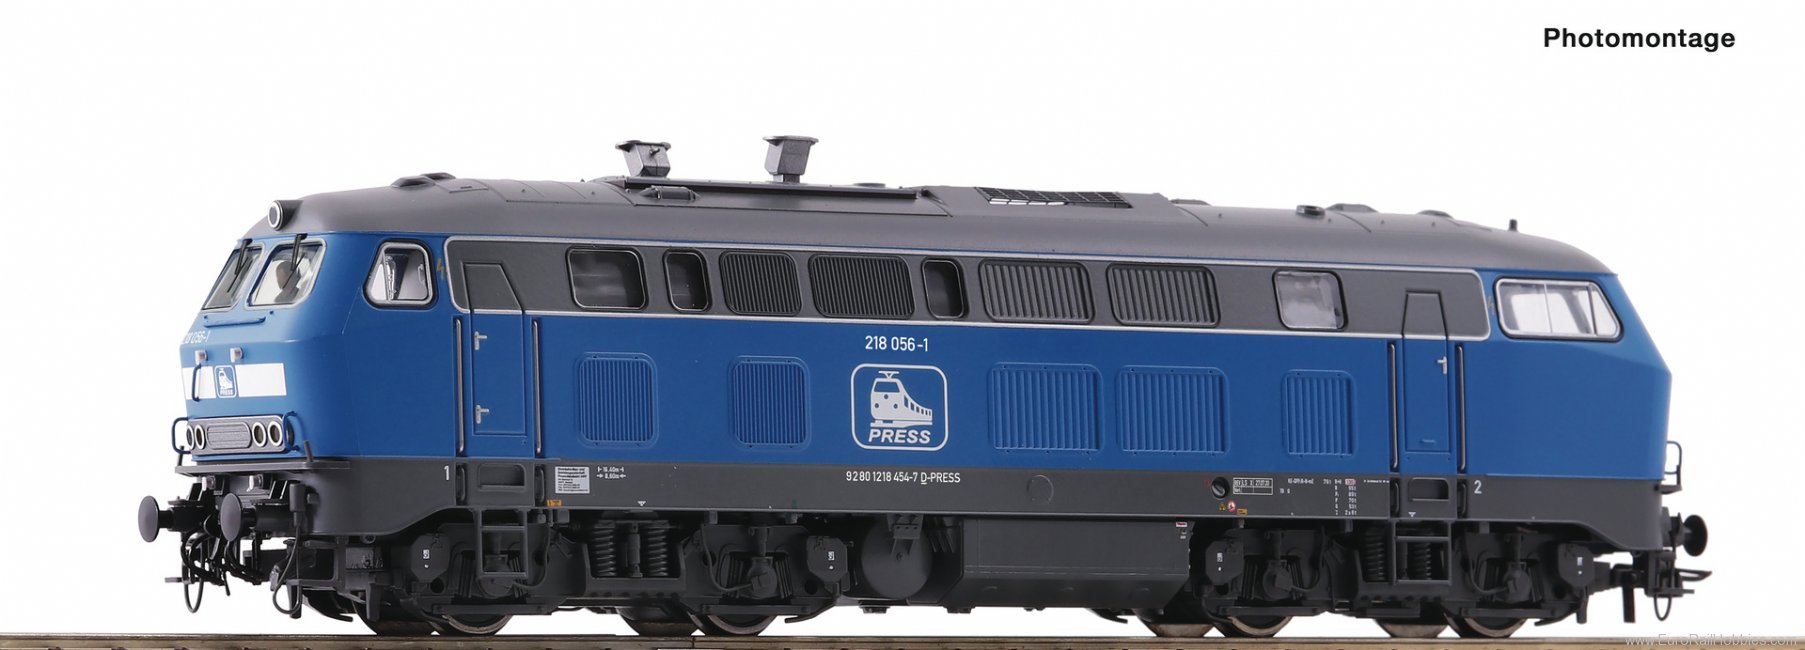 Roco 7300025 Diesel locomotive 218 056-1, PRESS (DC Analog